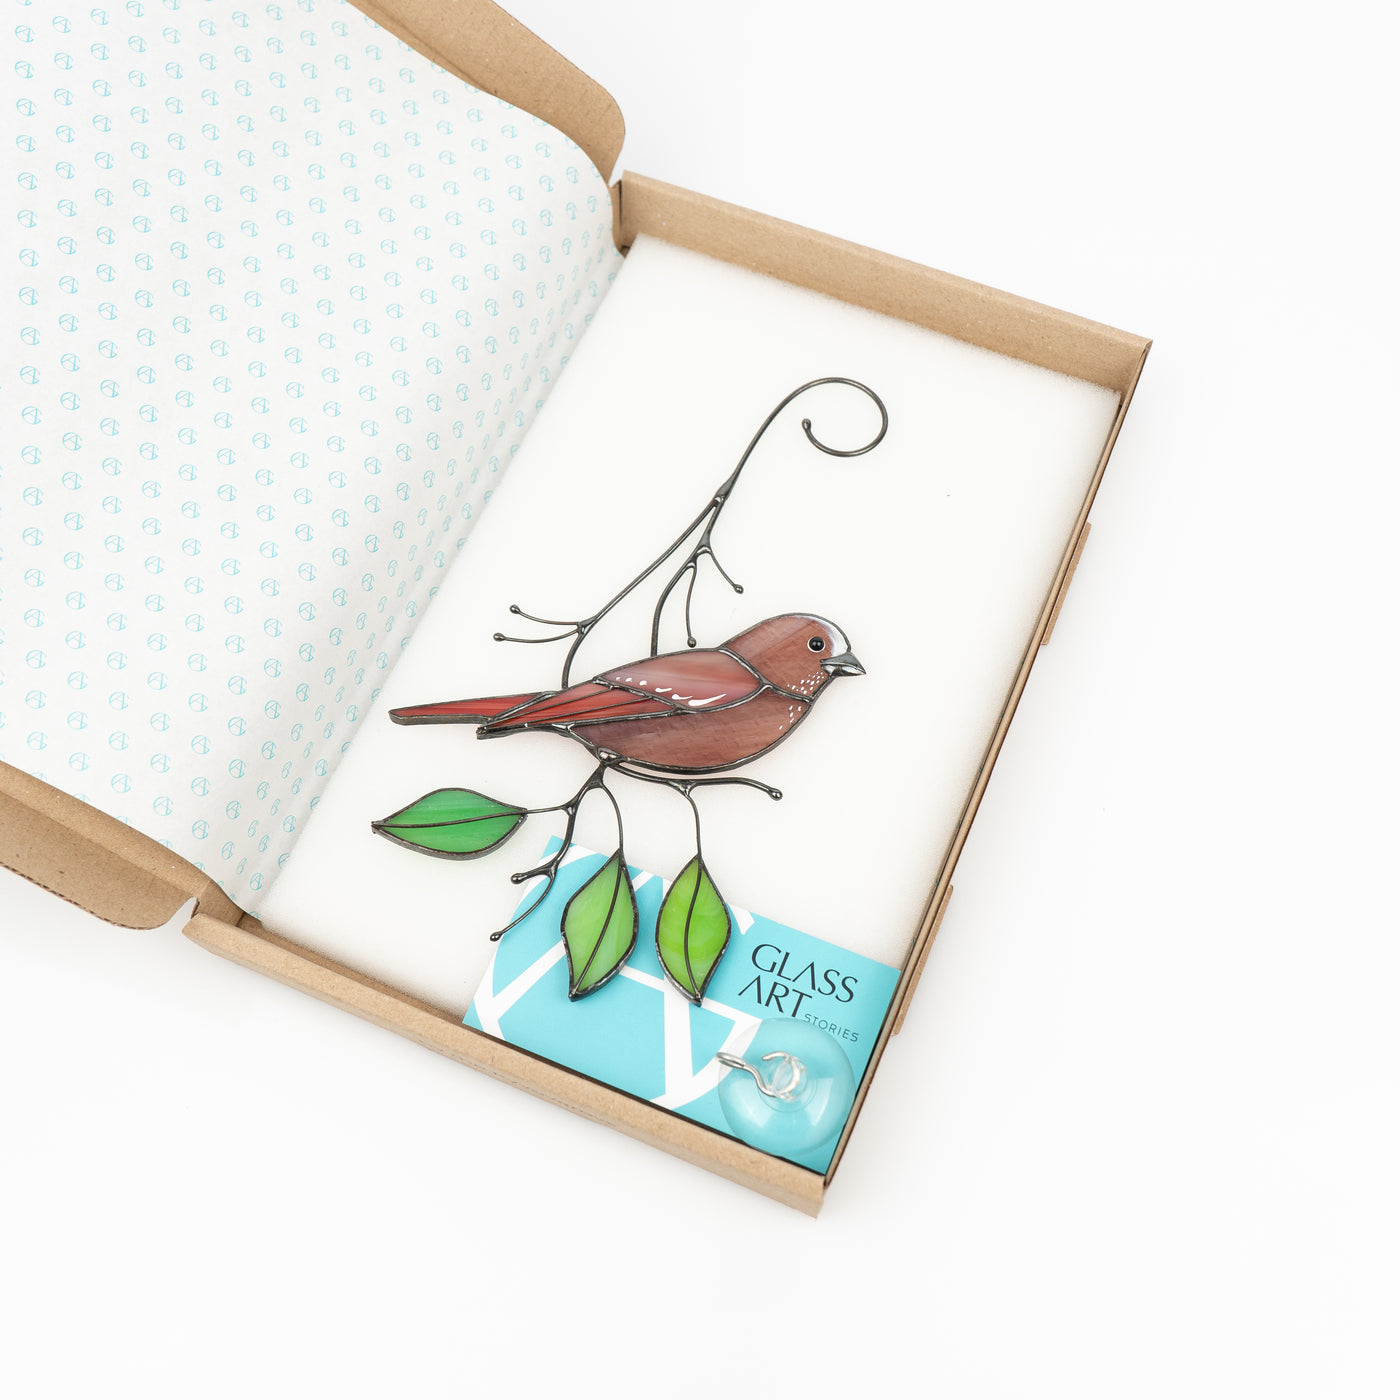 Stained glass rosefinch bird suncatcher in a brand box